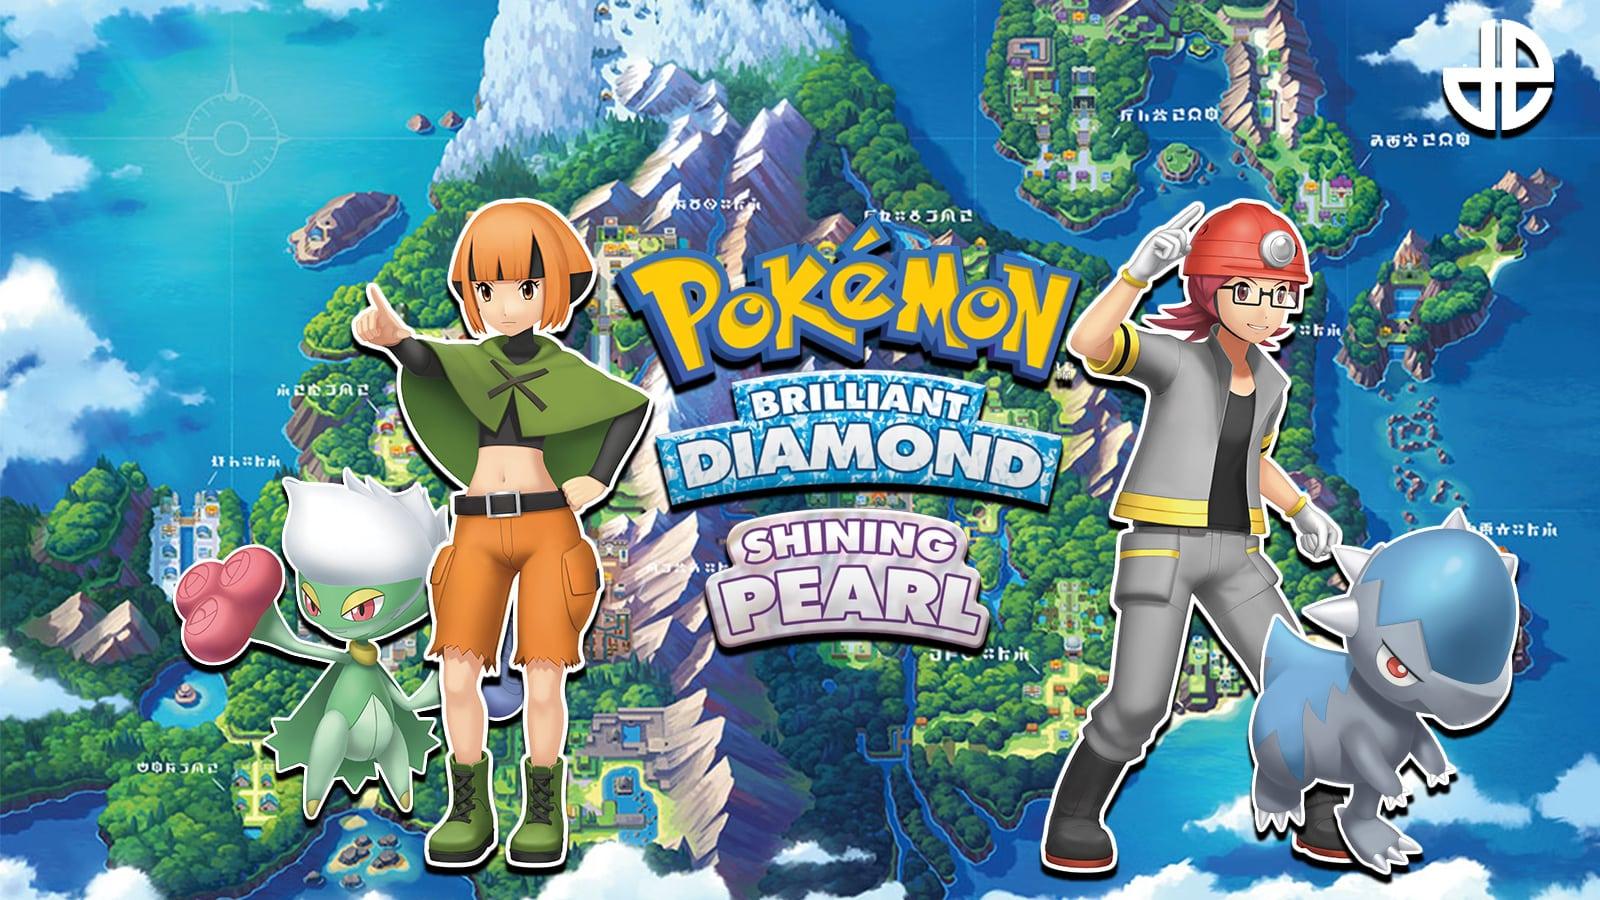 Pokemon Brilliant Diamond & Shining Pearl Gym Leaders how to beat screenshot